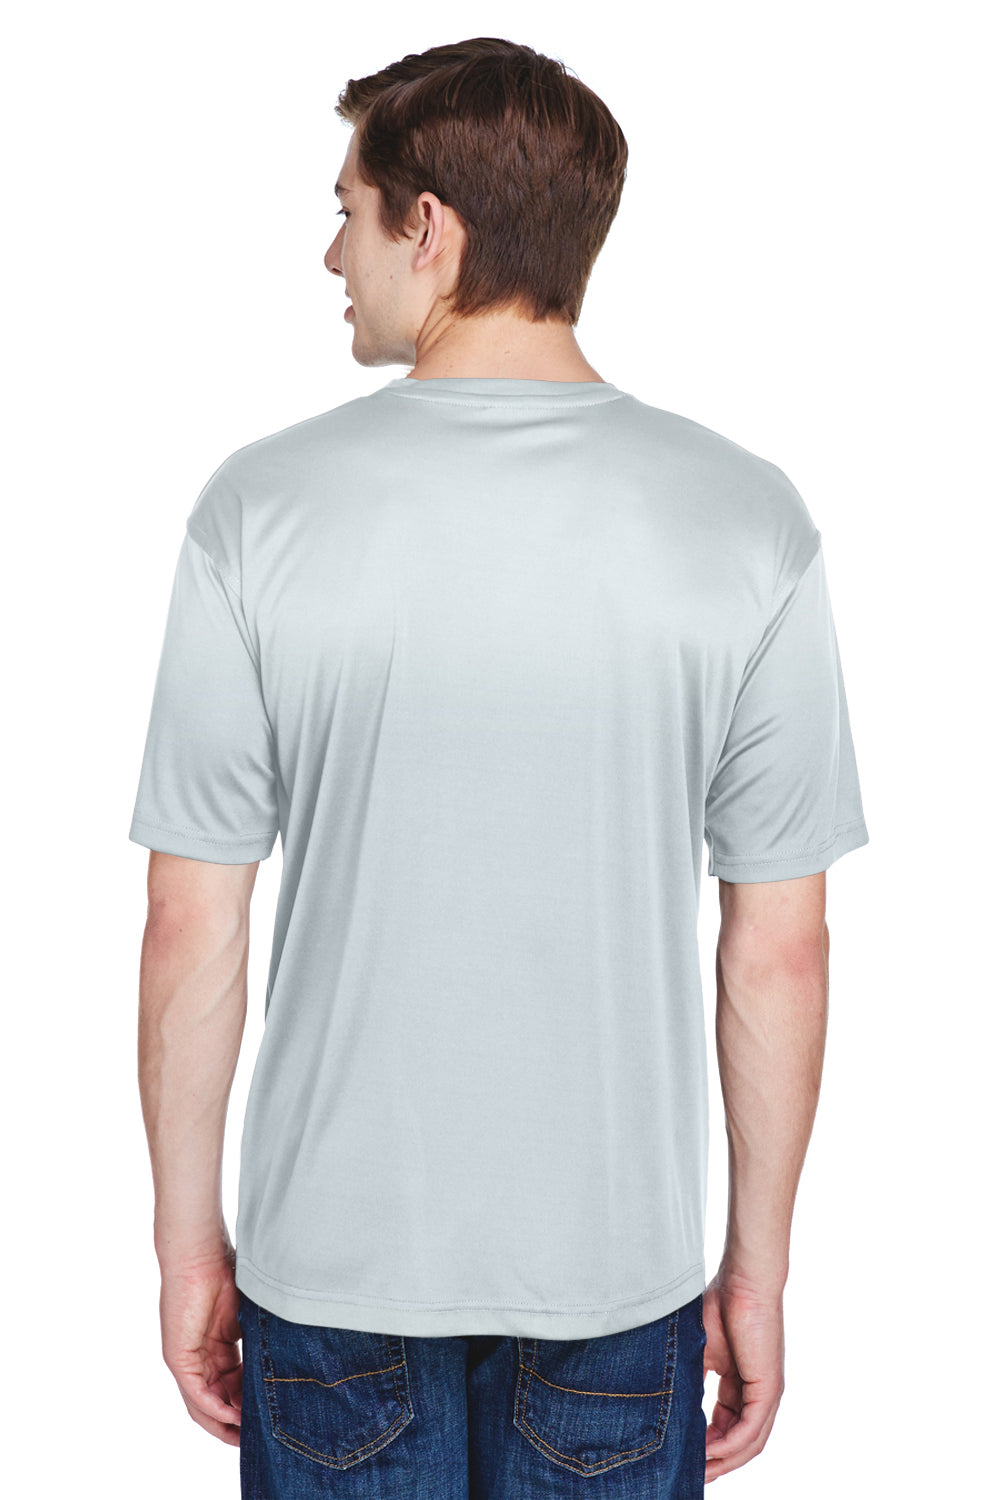 UltraClub 8620 Mens Cool & Dry Performance Moisture Wicking Short Sleeve Crewneck T-Shirt Grey Back